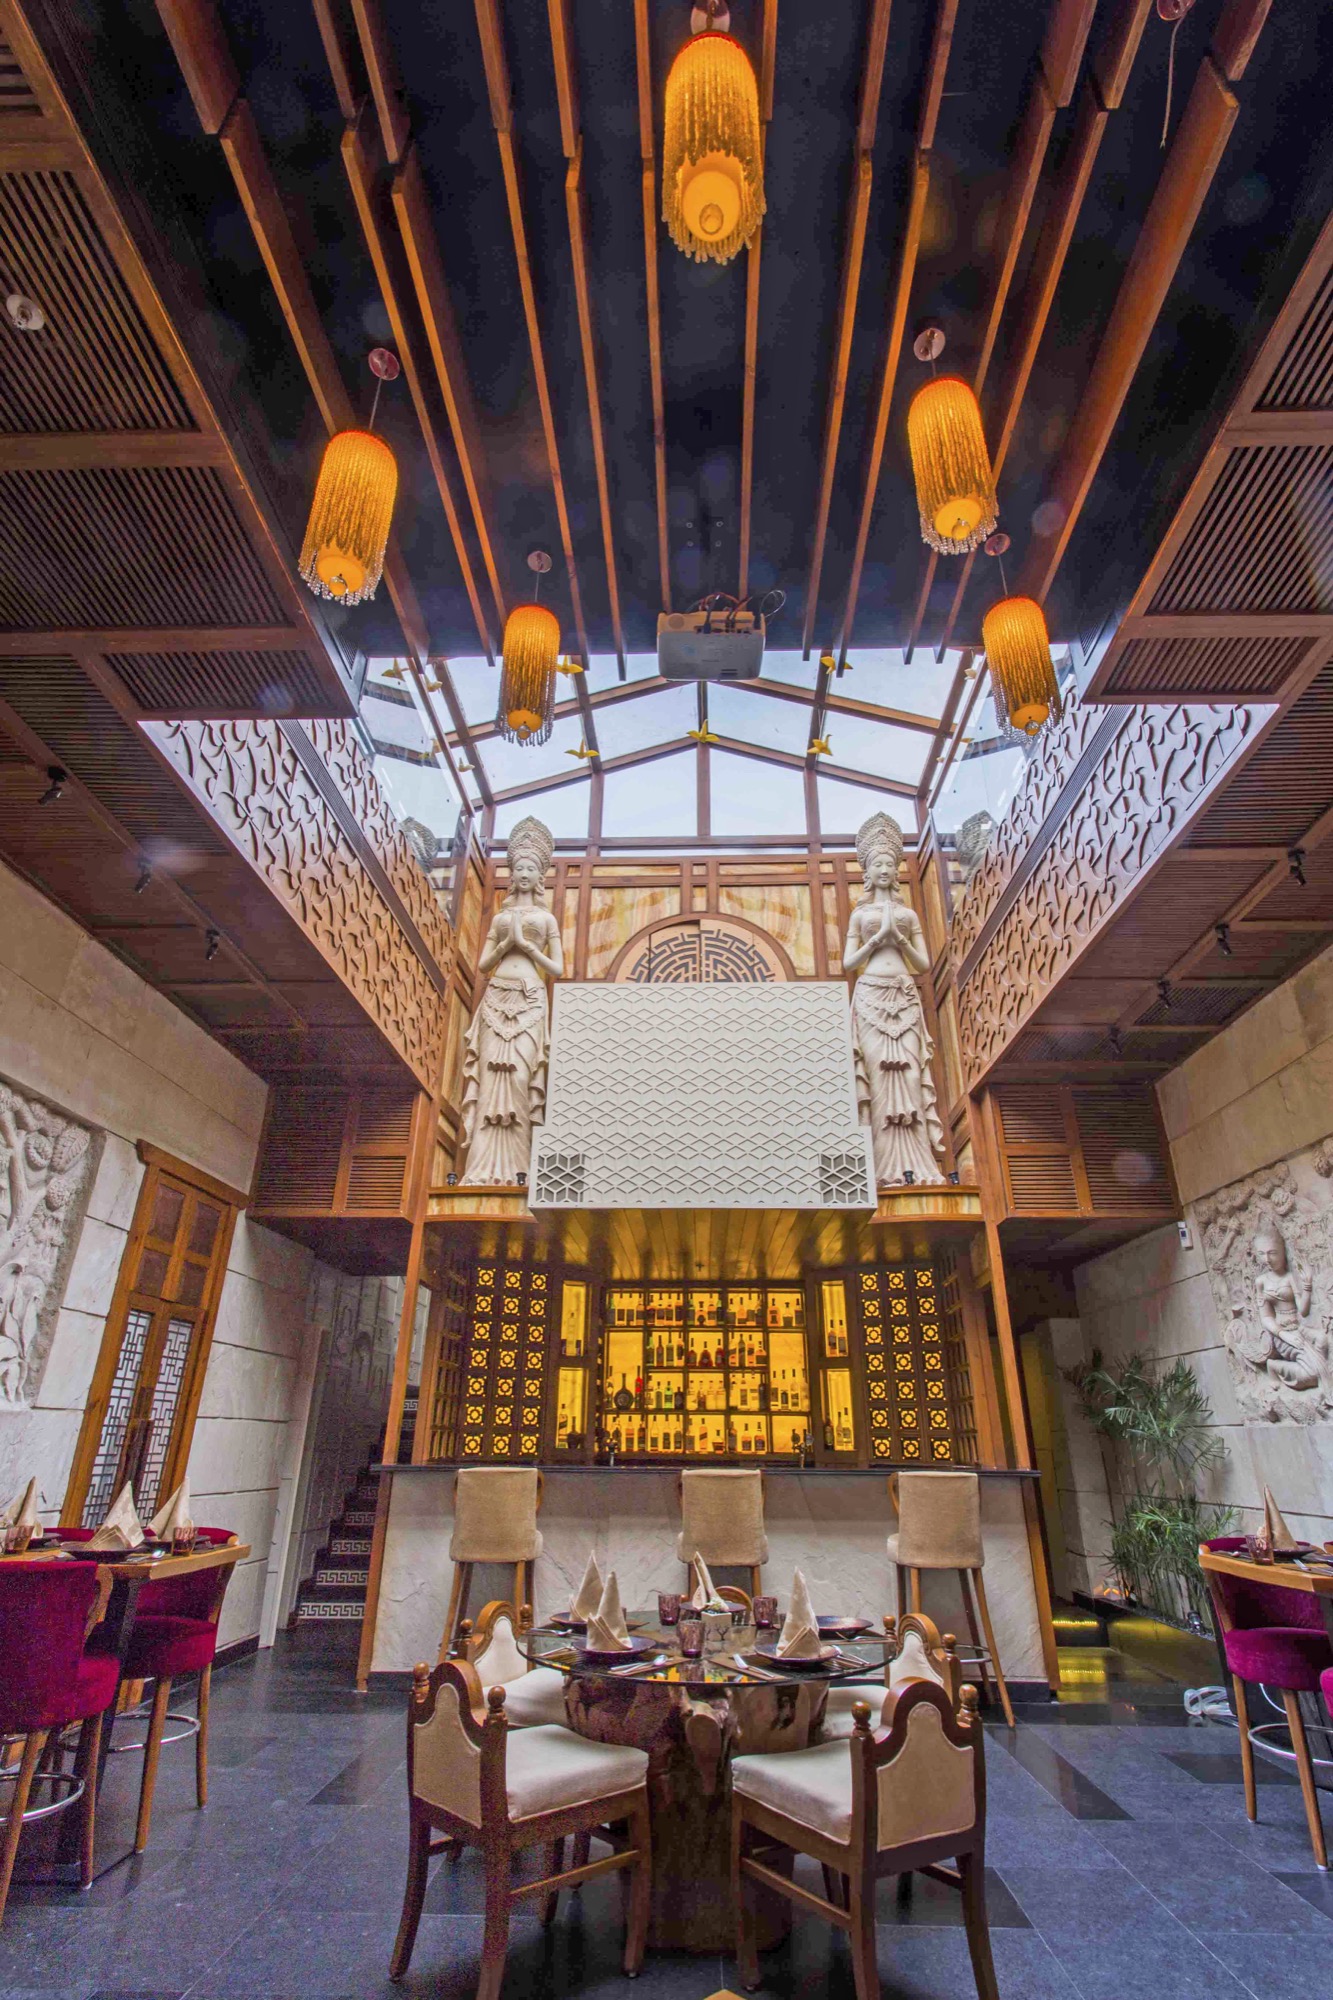 Best of Asia Village, Interior design for a restaurant at Delhi by Aspire Designs 9